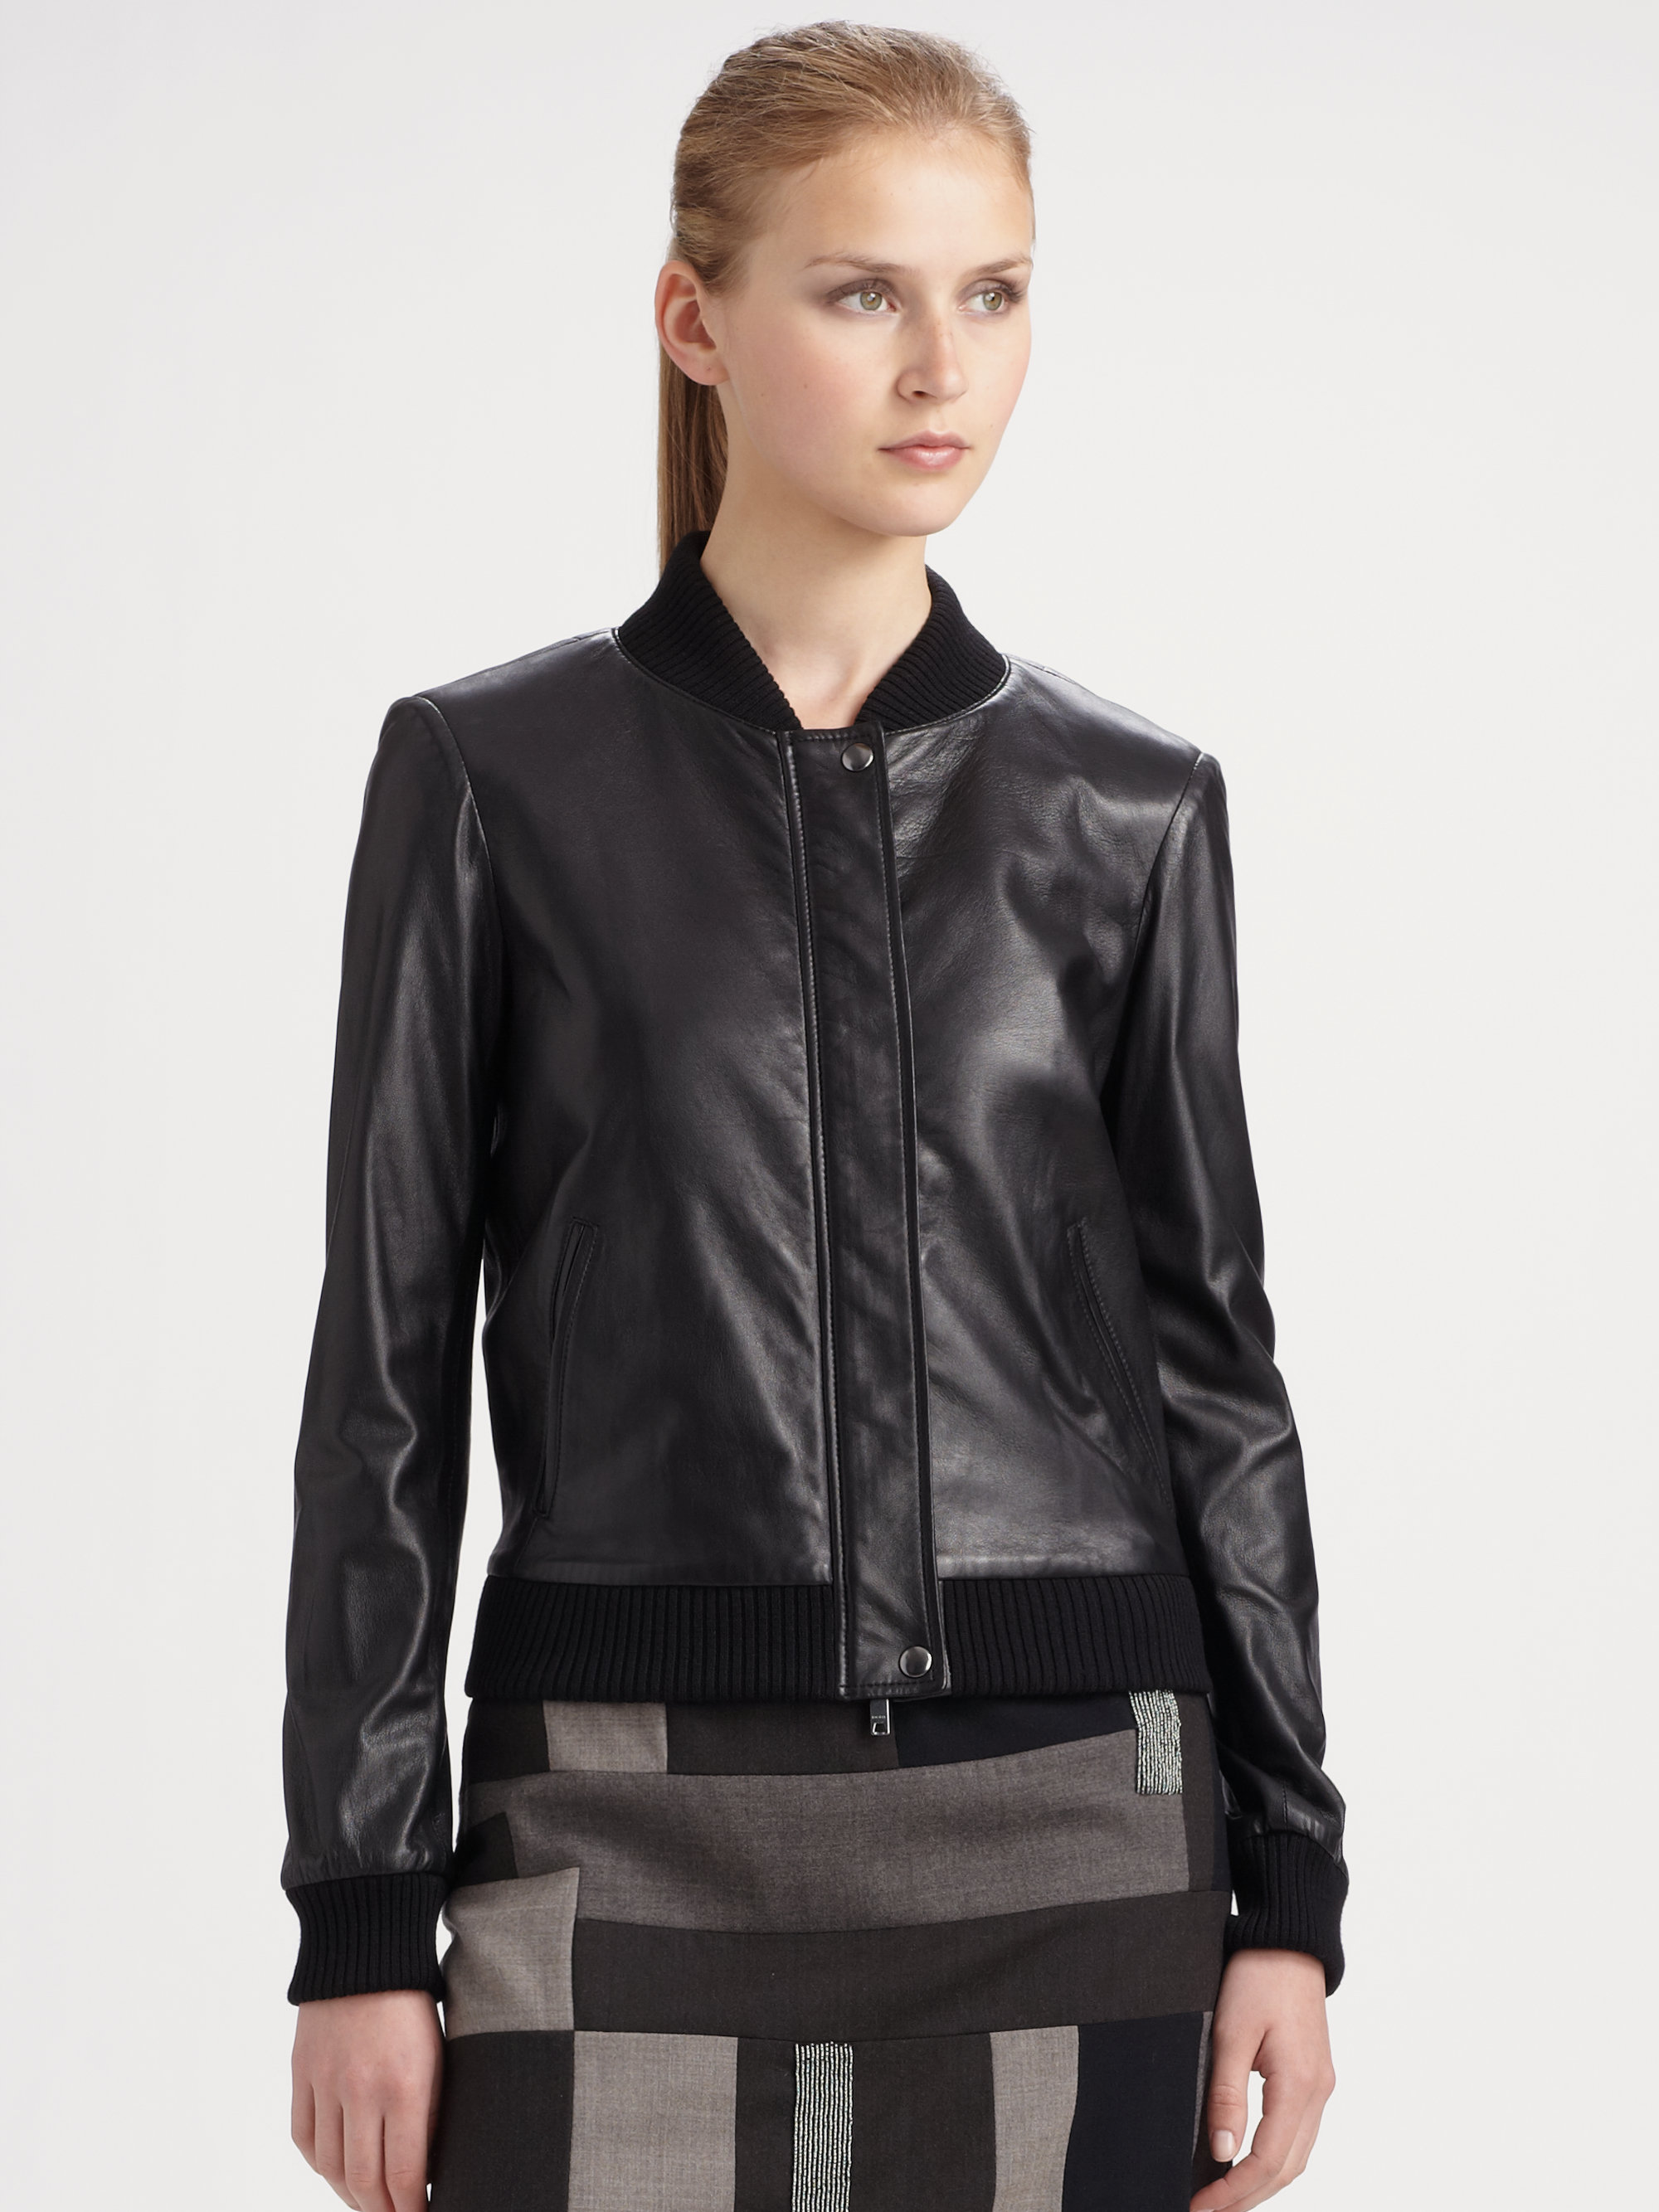 Dkny Leather Bomber Jacket | Varsity Apparel Jackets